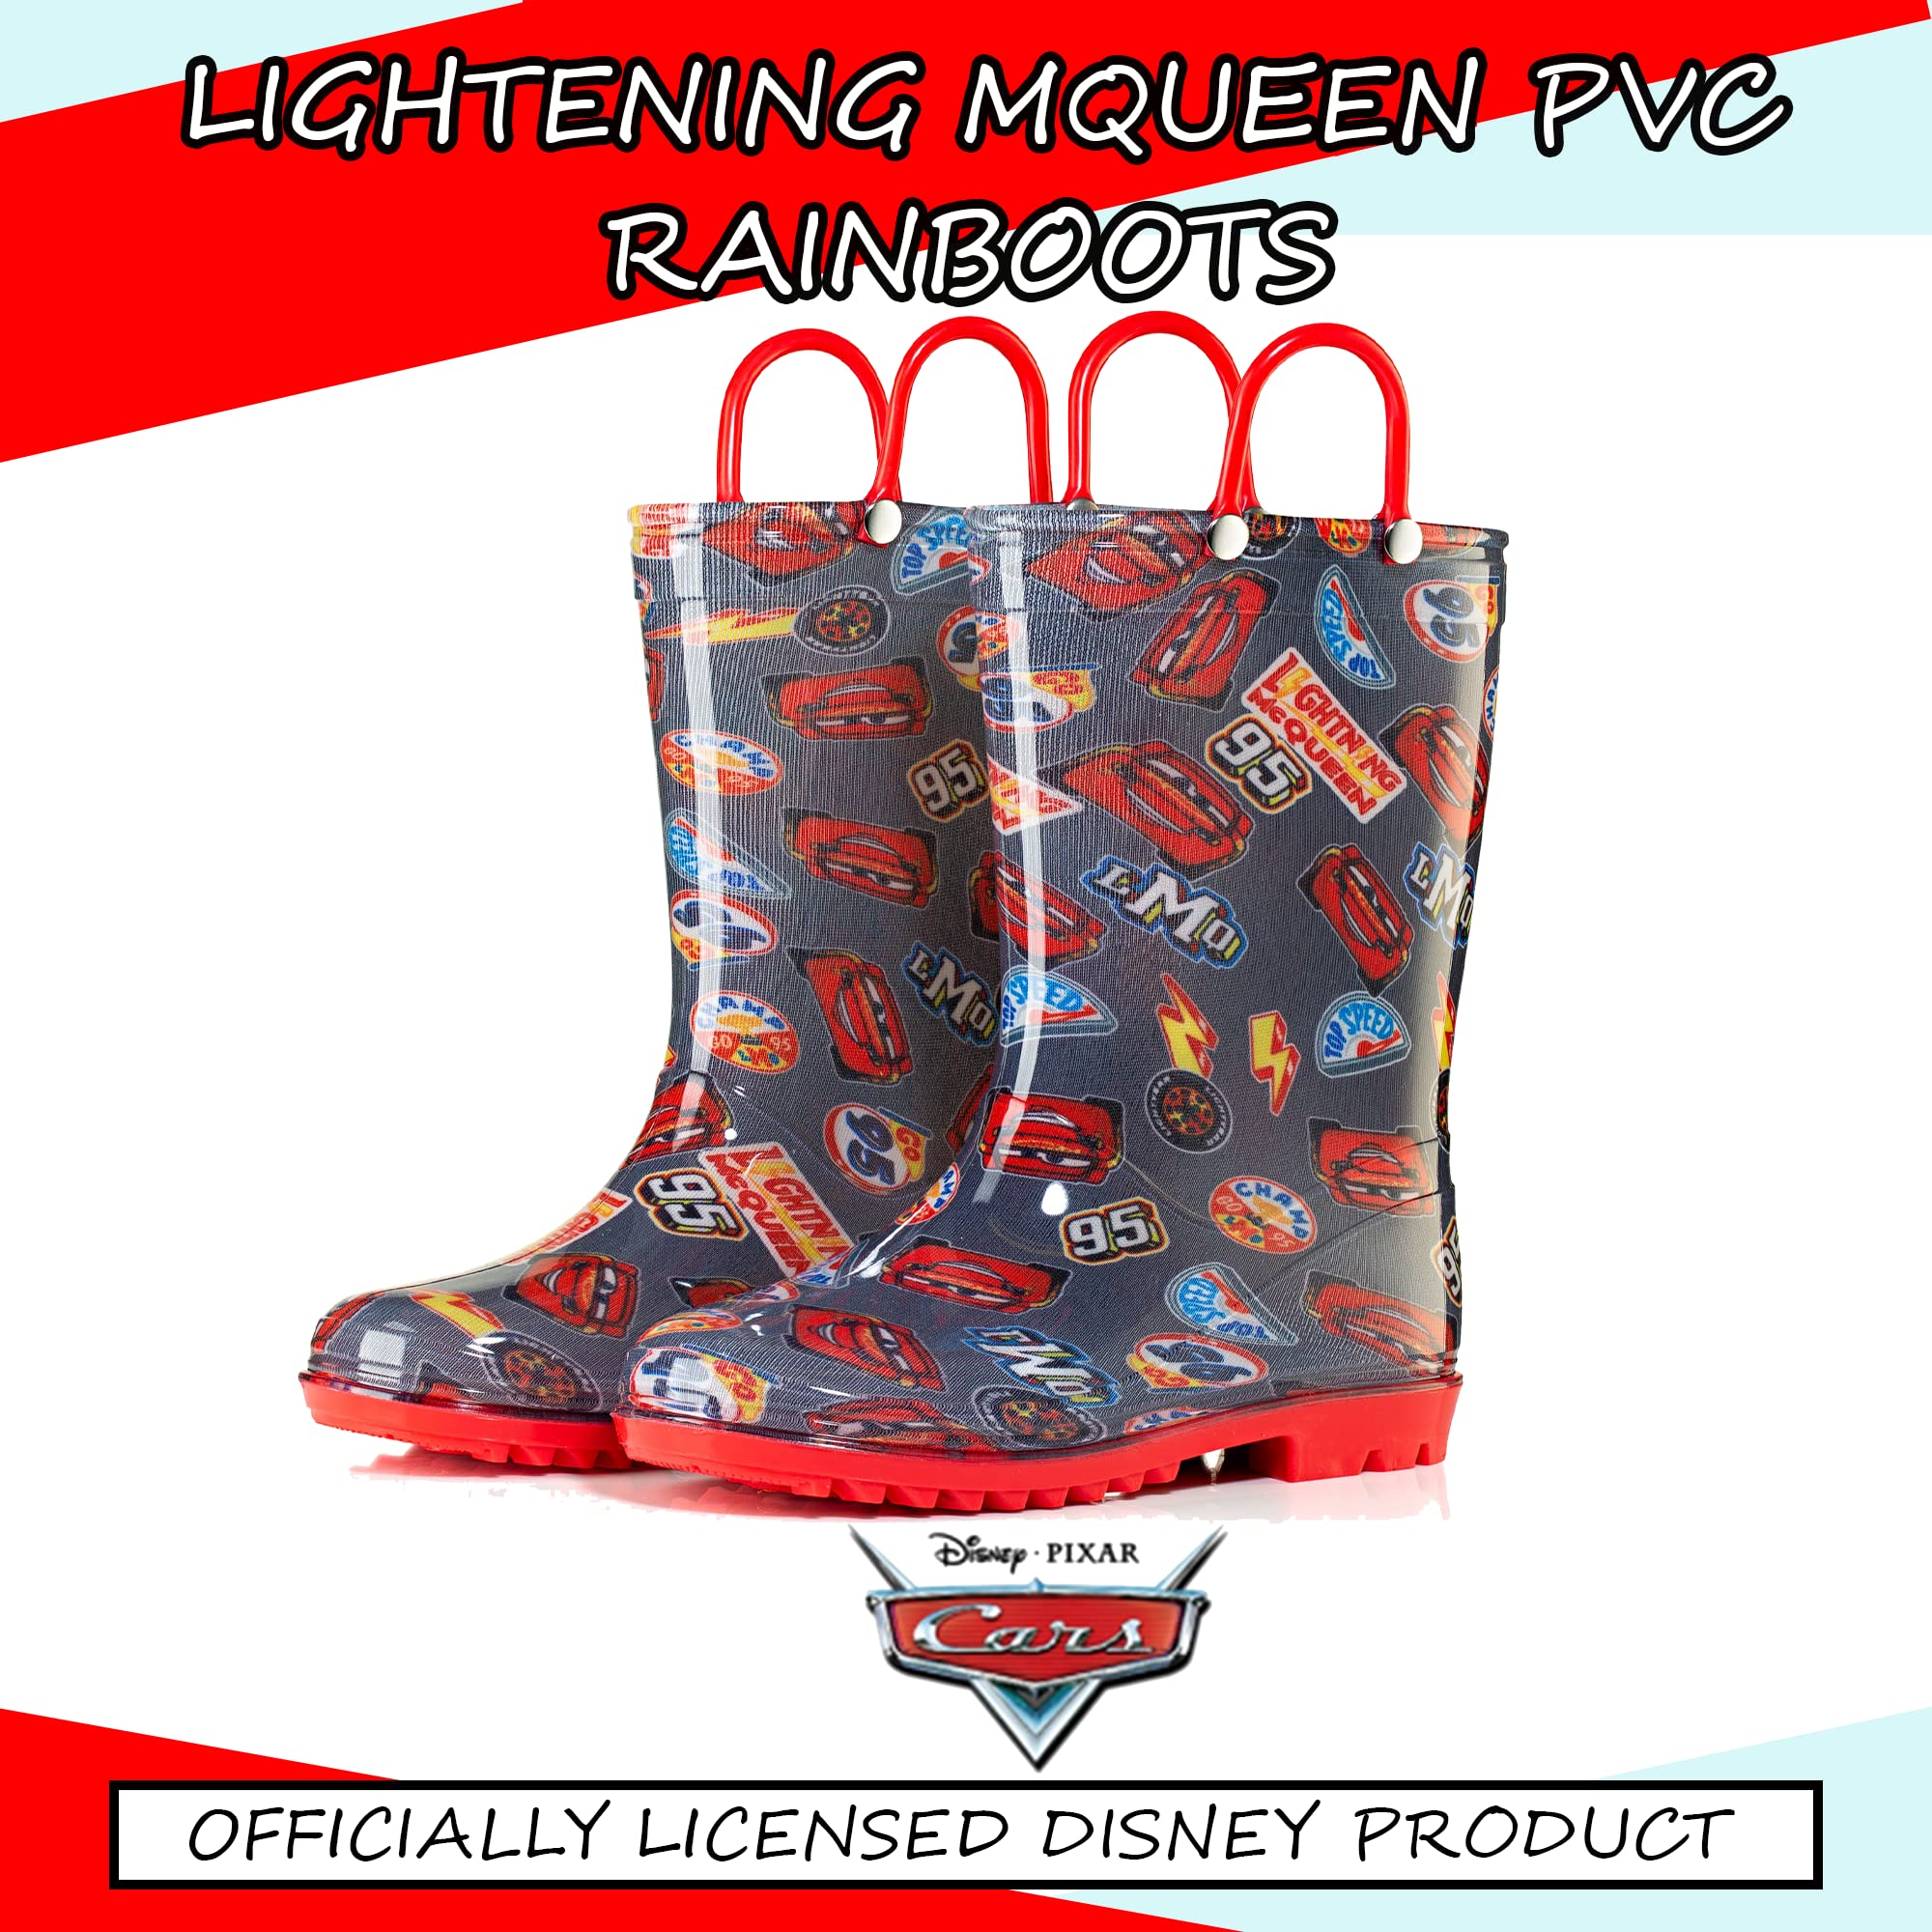 Disney Cars Lightening McQueen PVC Rainboots For Boys Easy-on Handles - Black Size Toddler and Little Kids